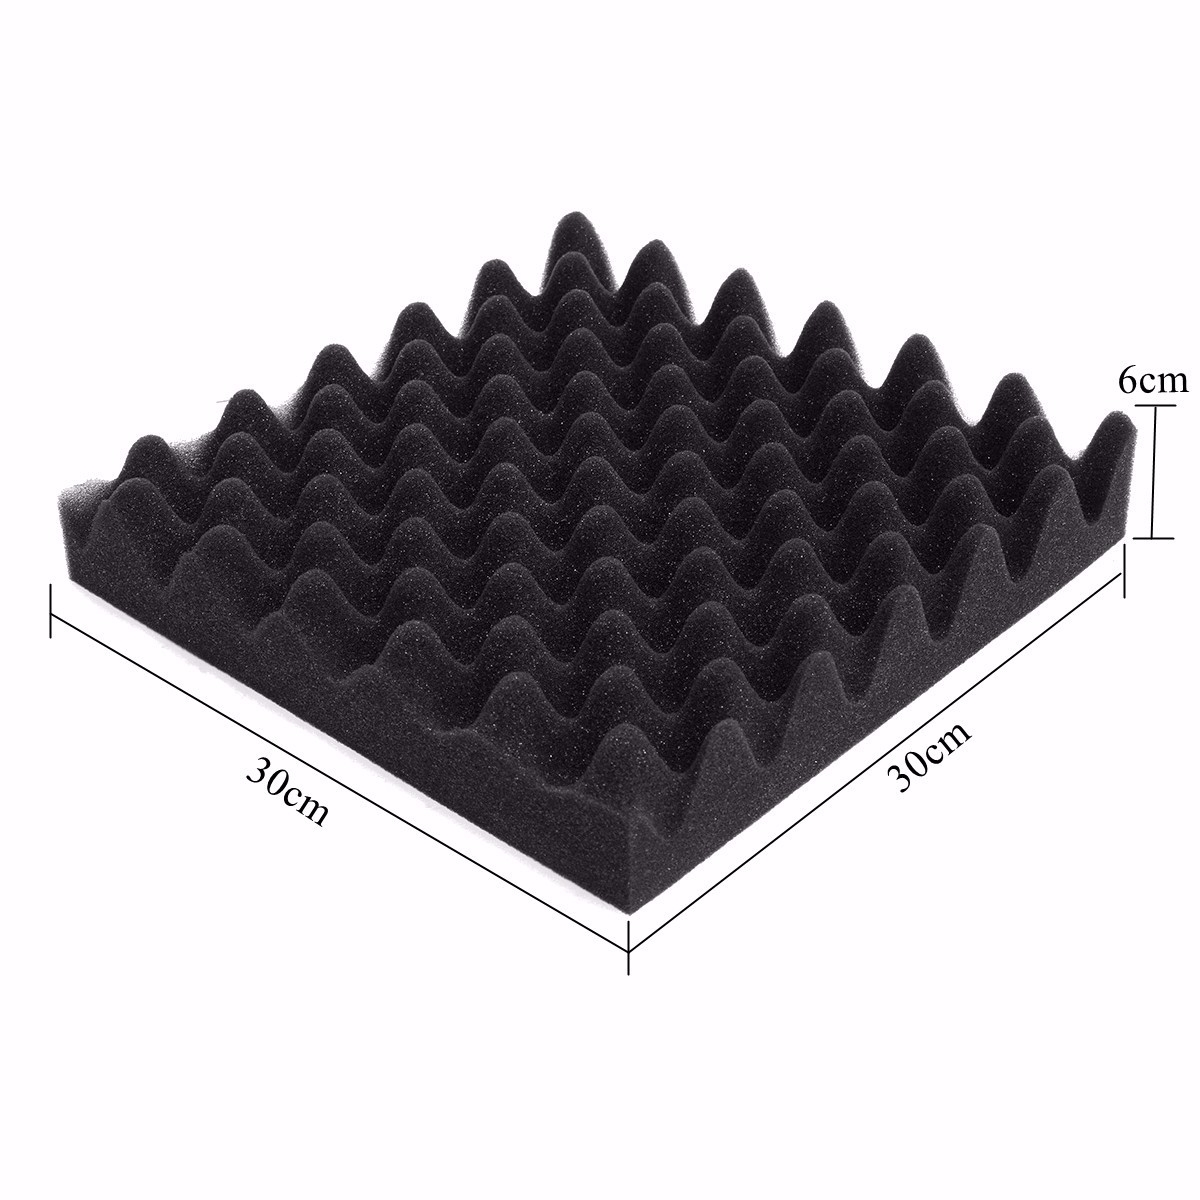 30x30x6cm Acoustic Panels Tiles Studio SoundProof Foam Insulation Closed Cell Foam